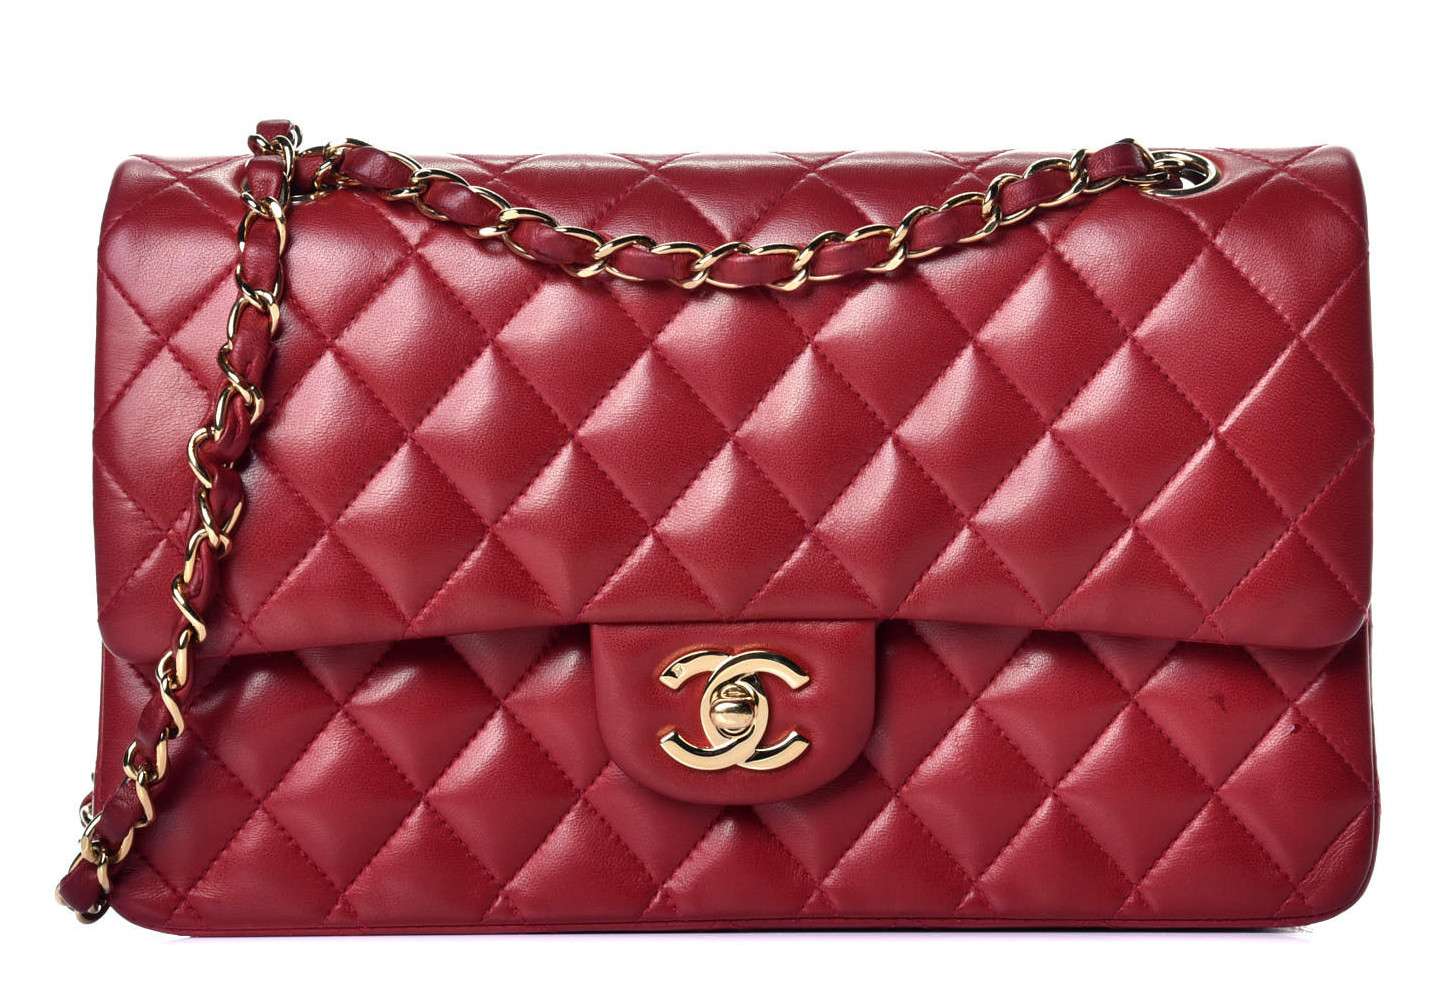 Chanel Lambskin Medium Red Classic Flap